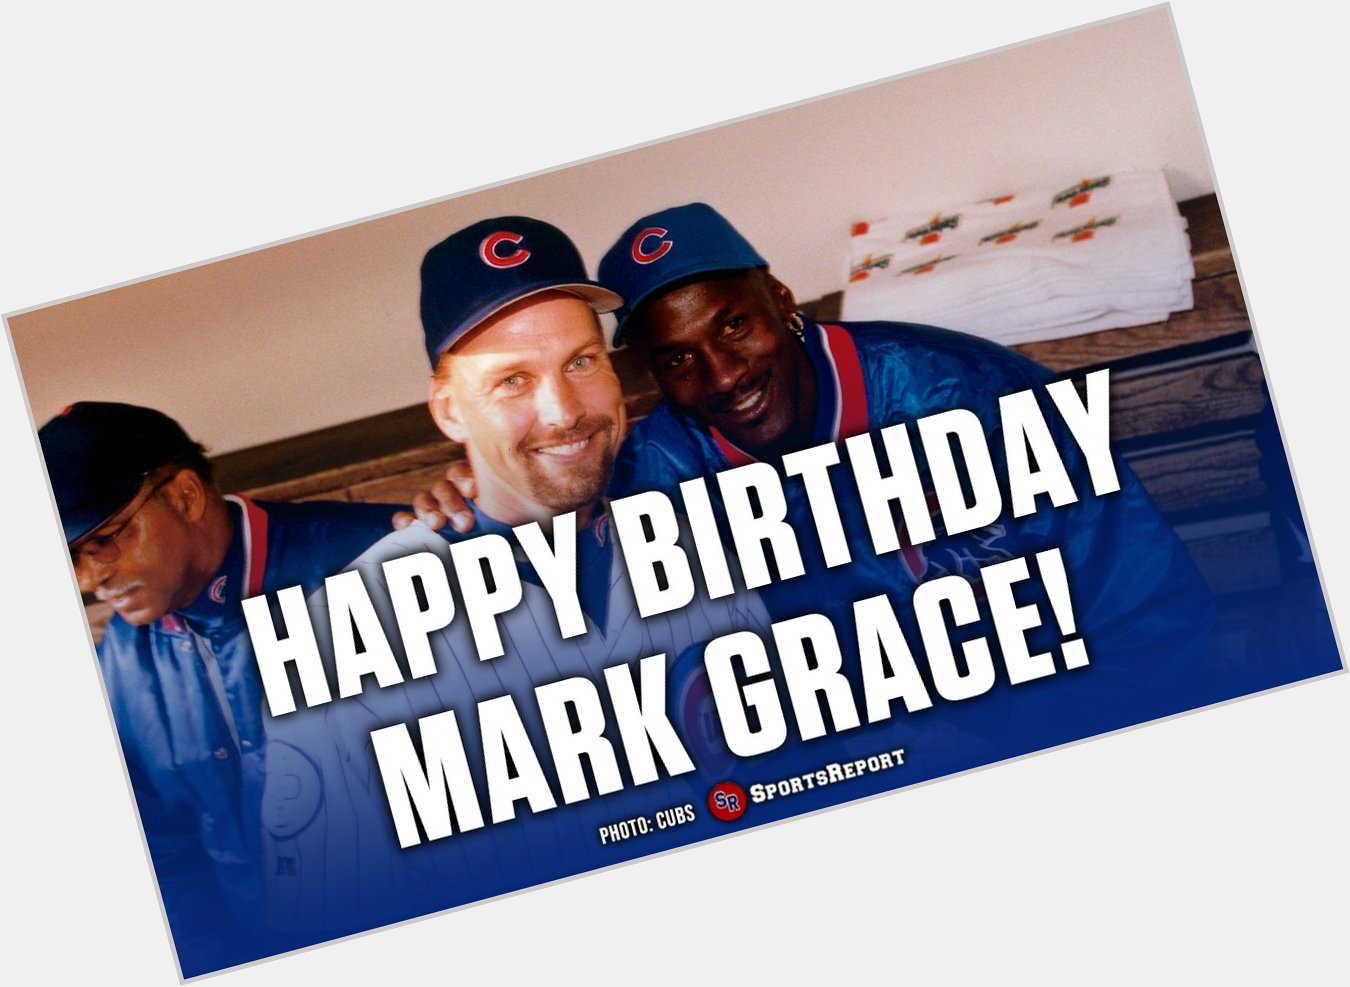  Fans, let\s wish legend Mark Grace a Happy Birthday! GO CUBS!! 